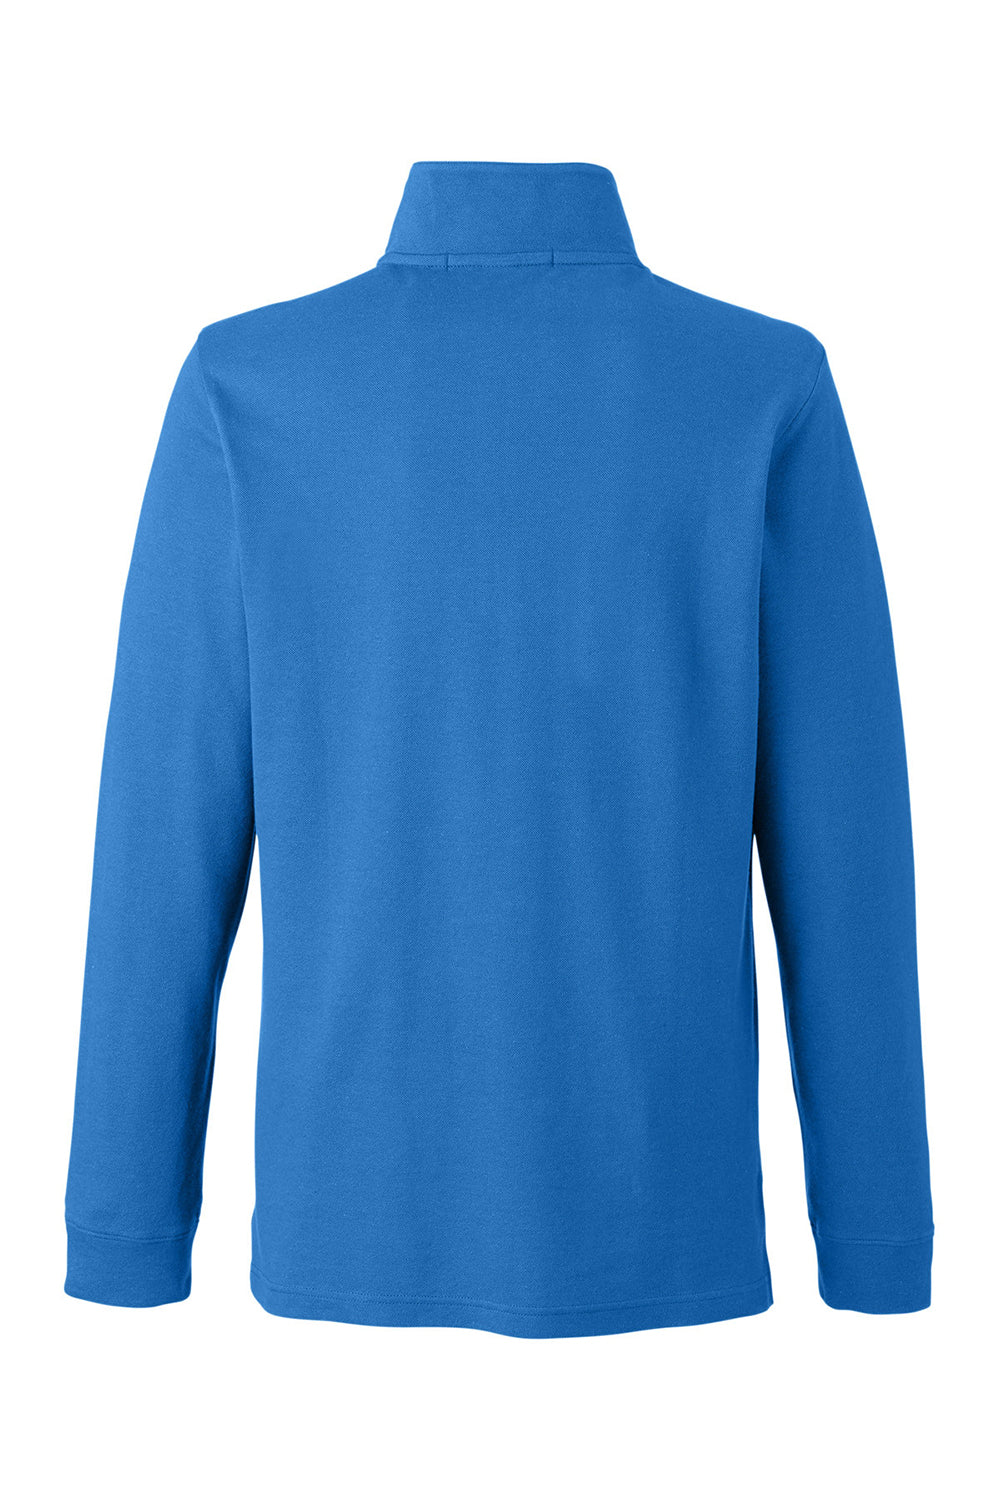 Devon & Jones DG400 Mens New Classics Performance Moisture Wicking 1/4 Zip Sweatshirt French Blue Flat Back